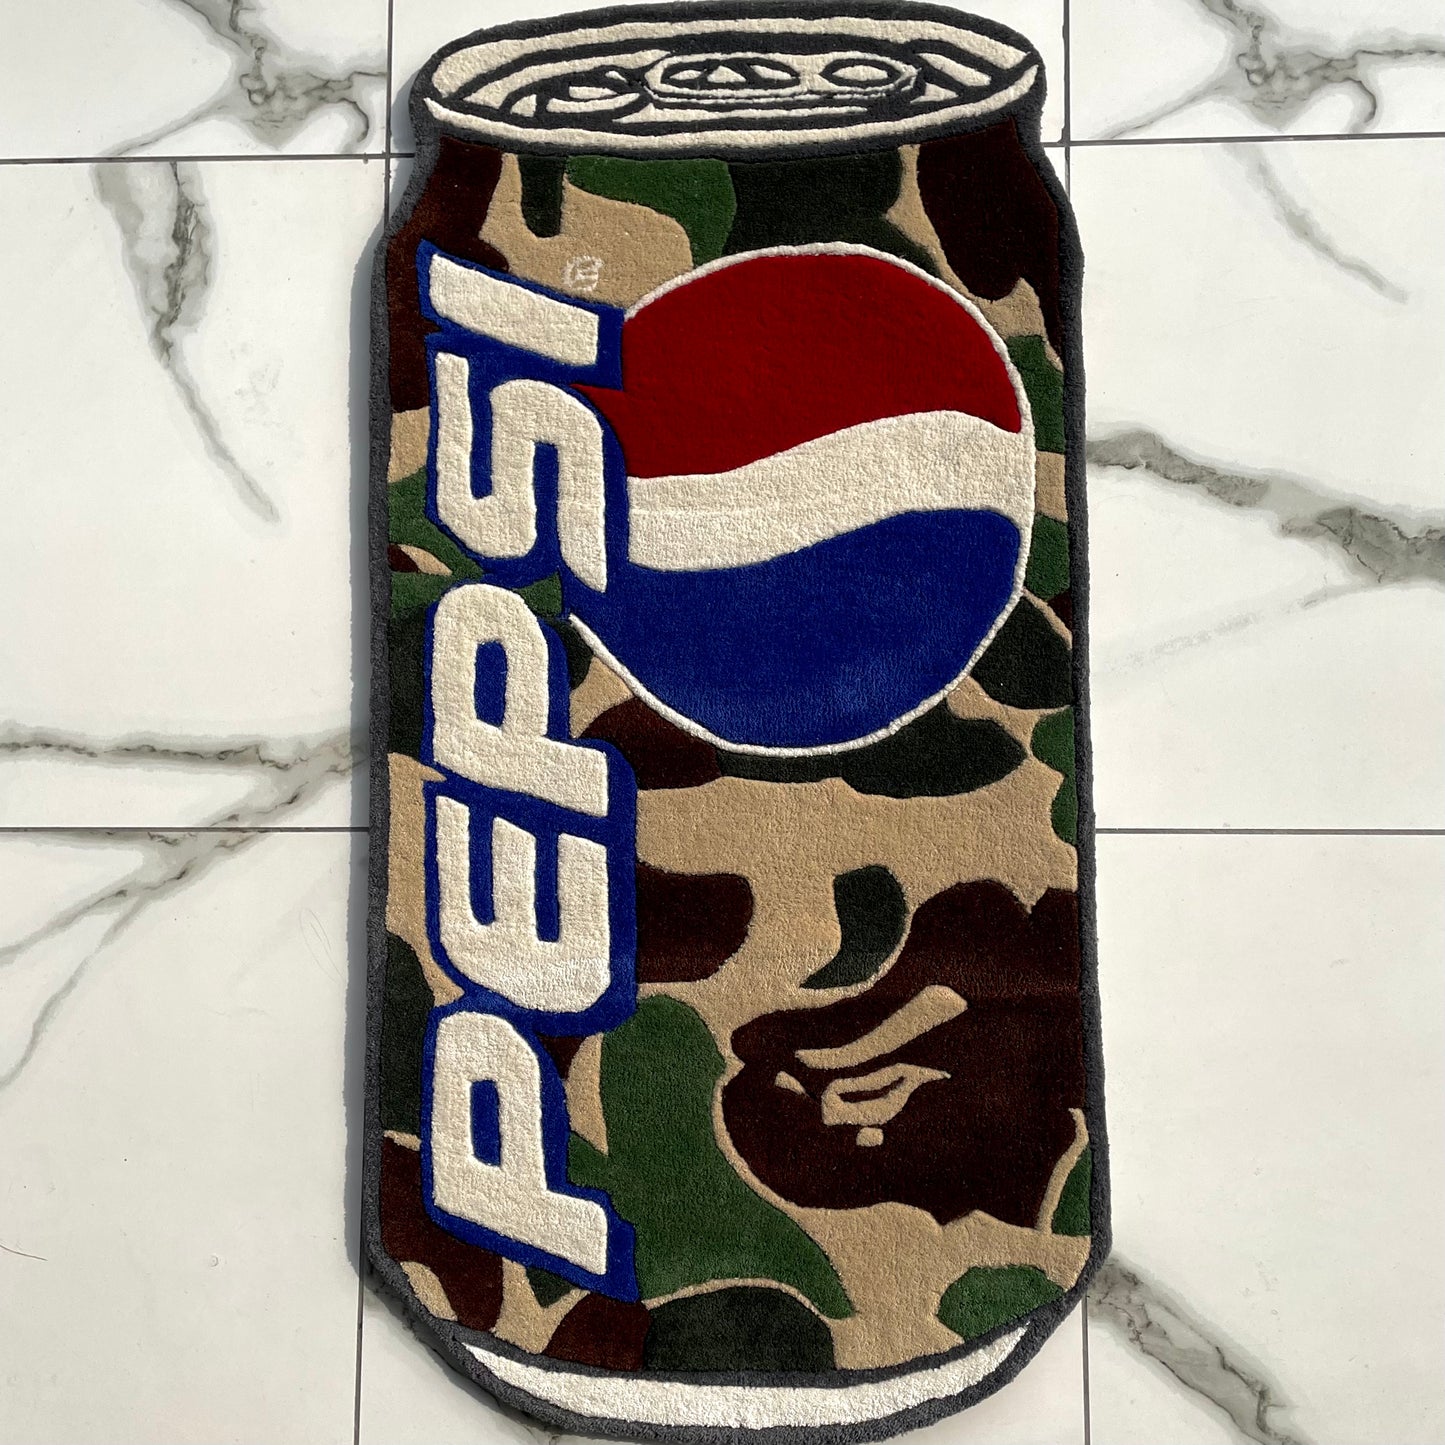 Pepsi x Aape Hand-Tufted Rug